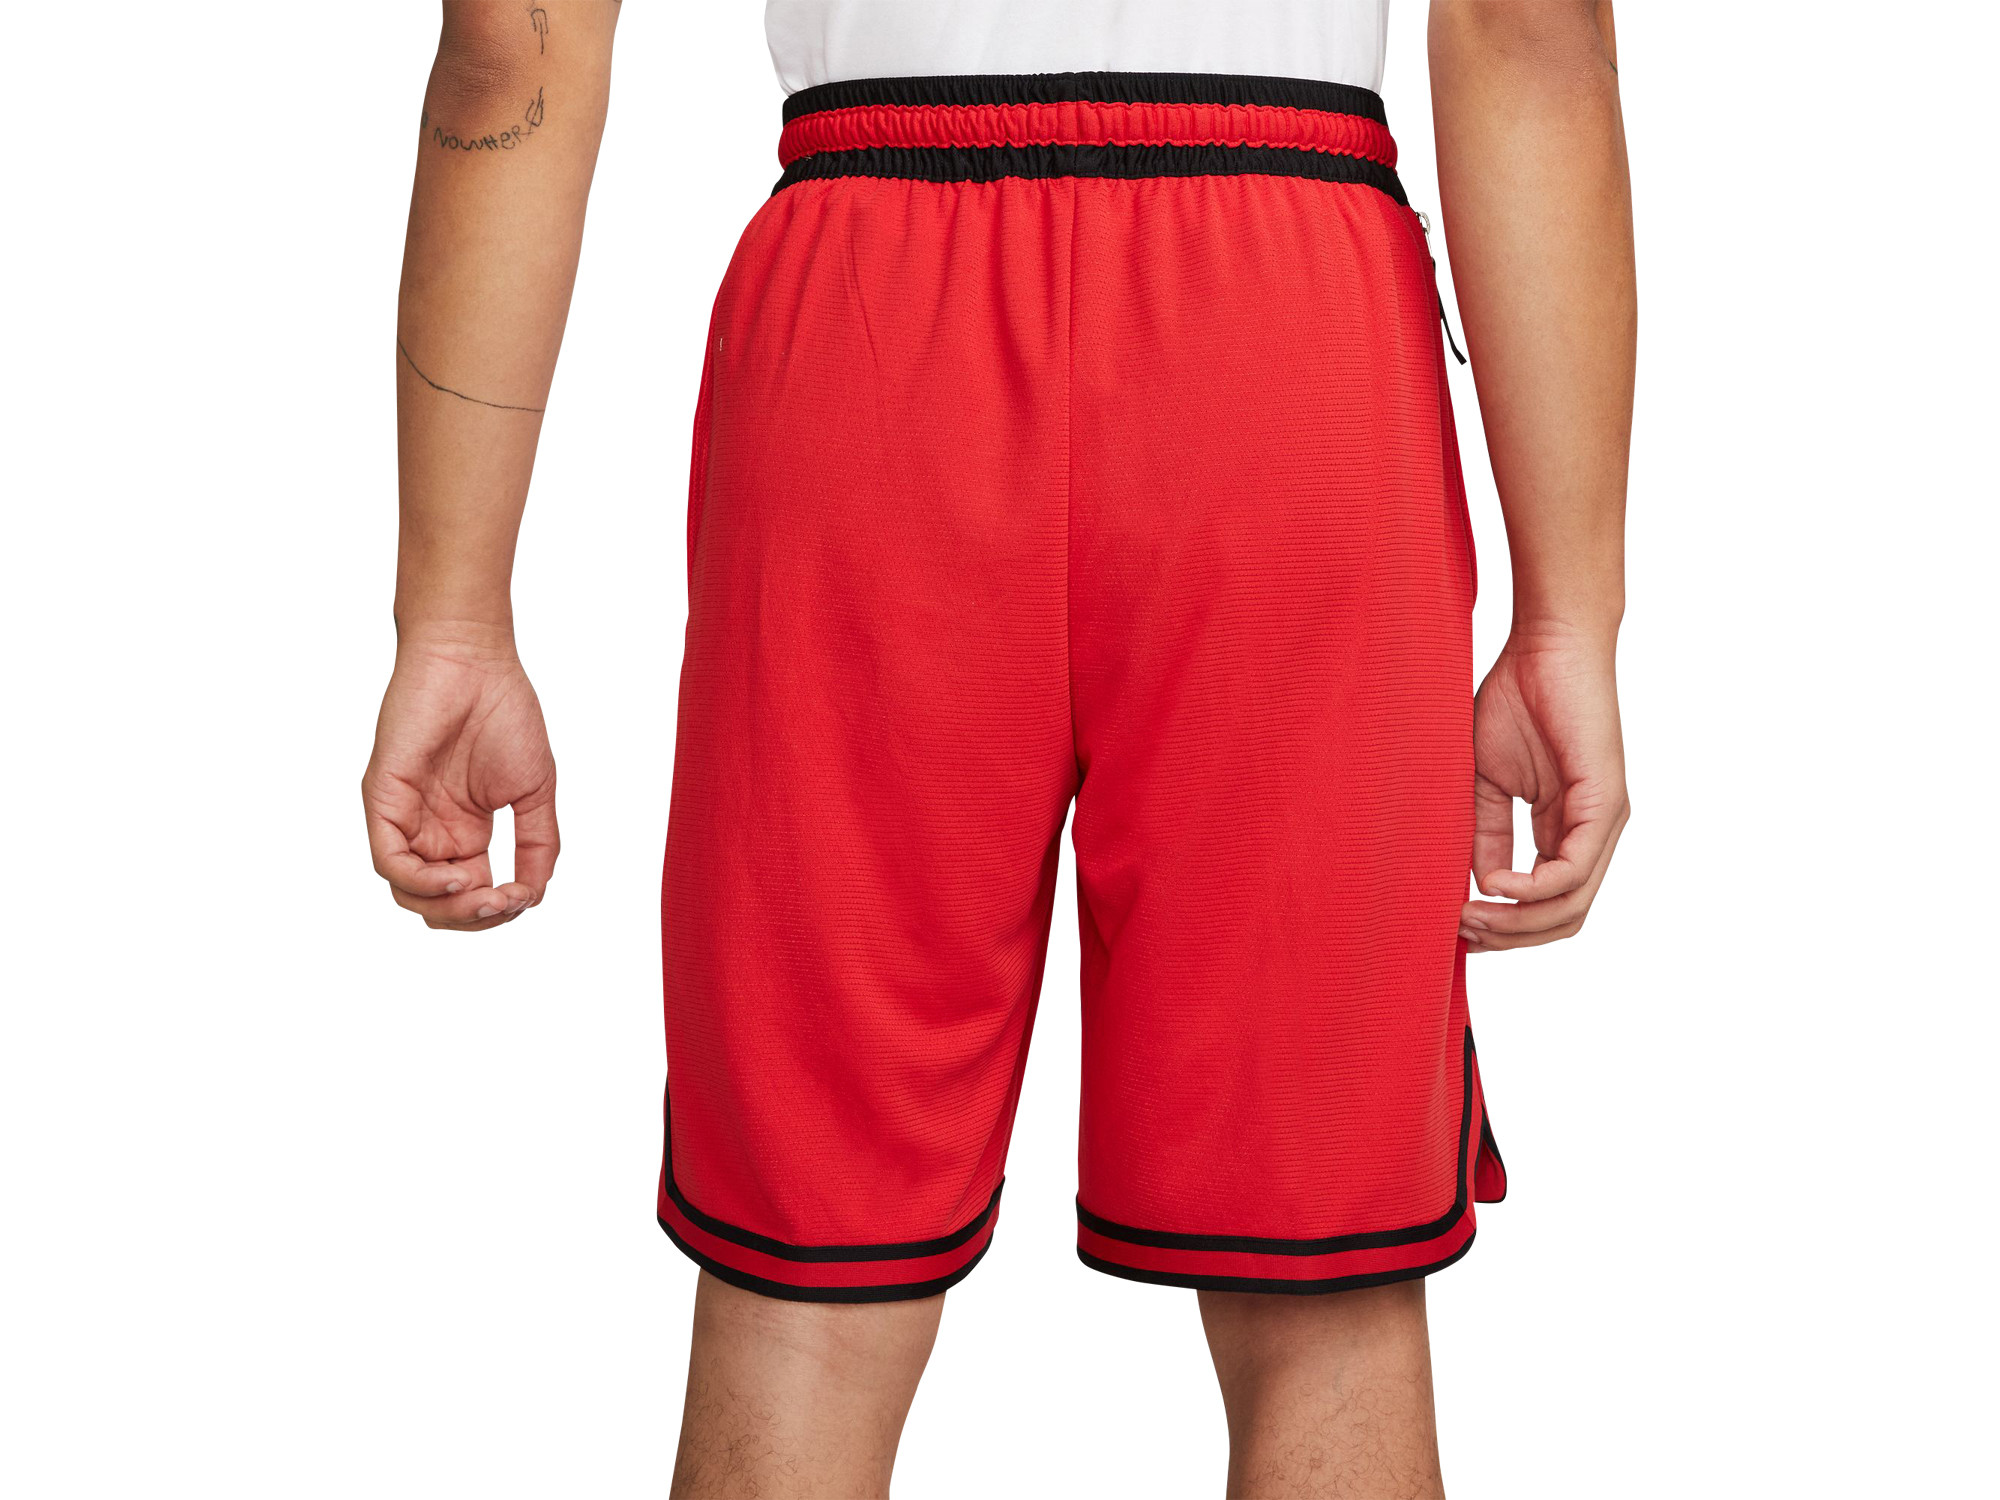 Nike Dri-Fit DNA Basketball Shorts